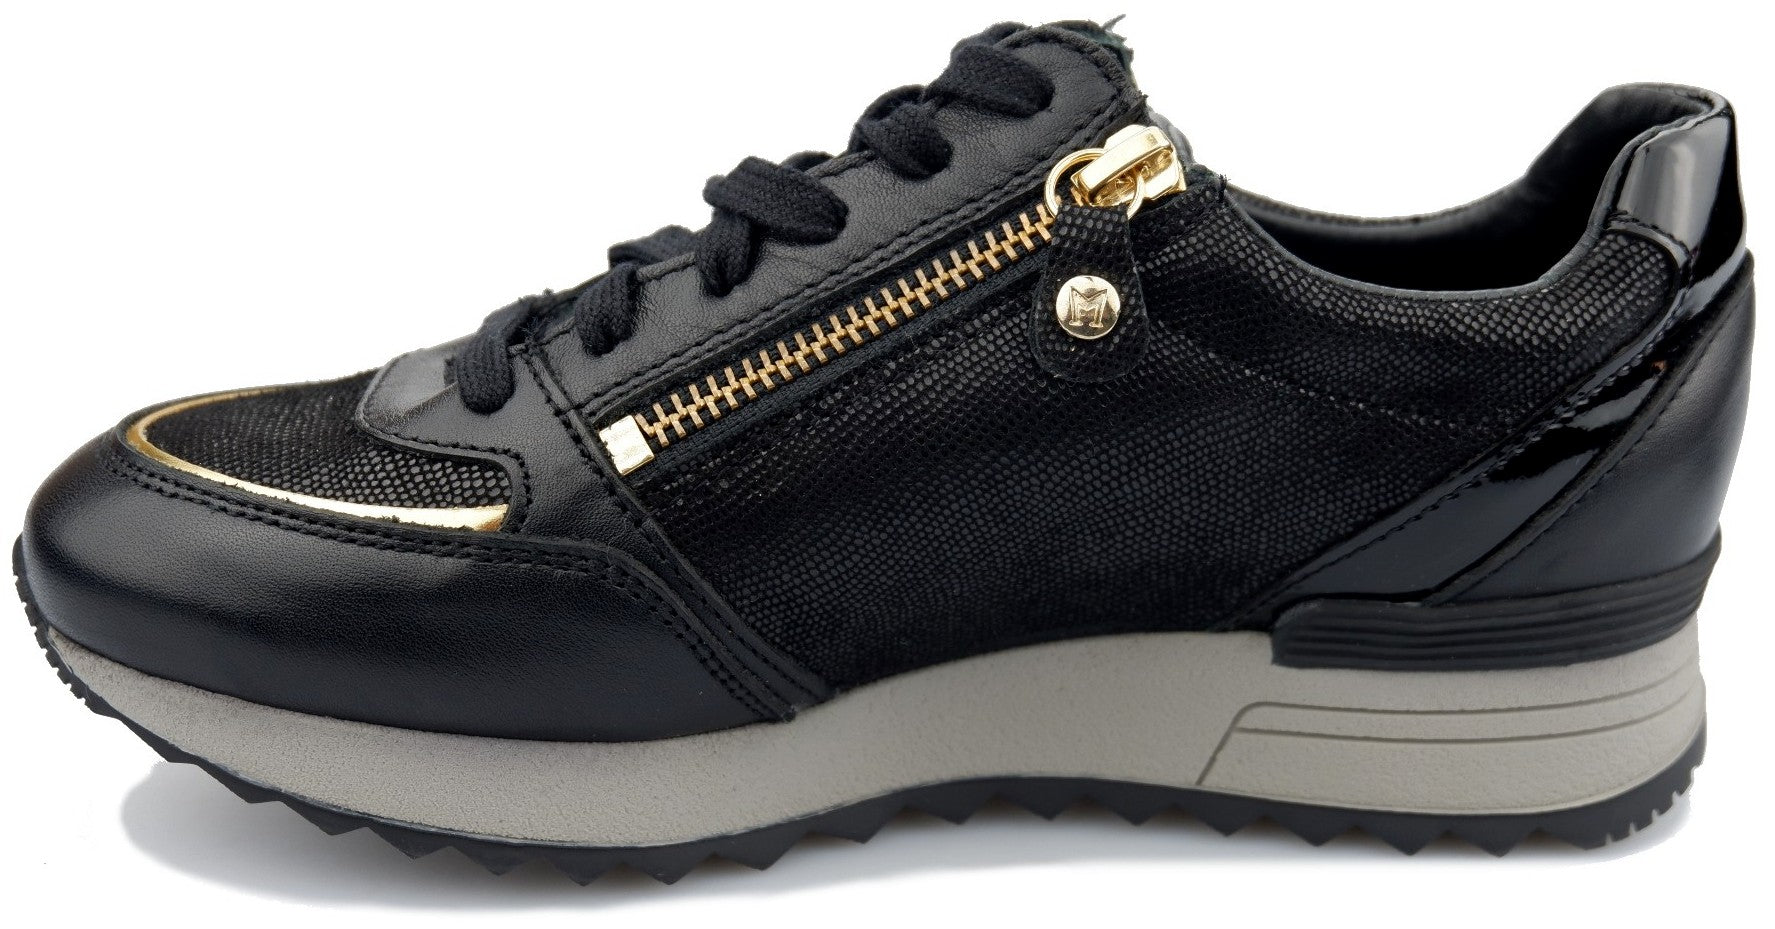 Mephisto Toscana Sneaker for women - Material Mix - Black - ChaplinshoesMephisto Toscana Sneaker for women - Material Mix - BlackMephisto